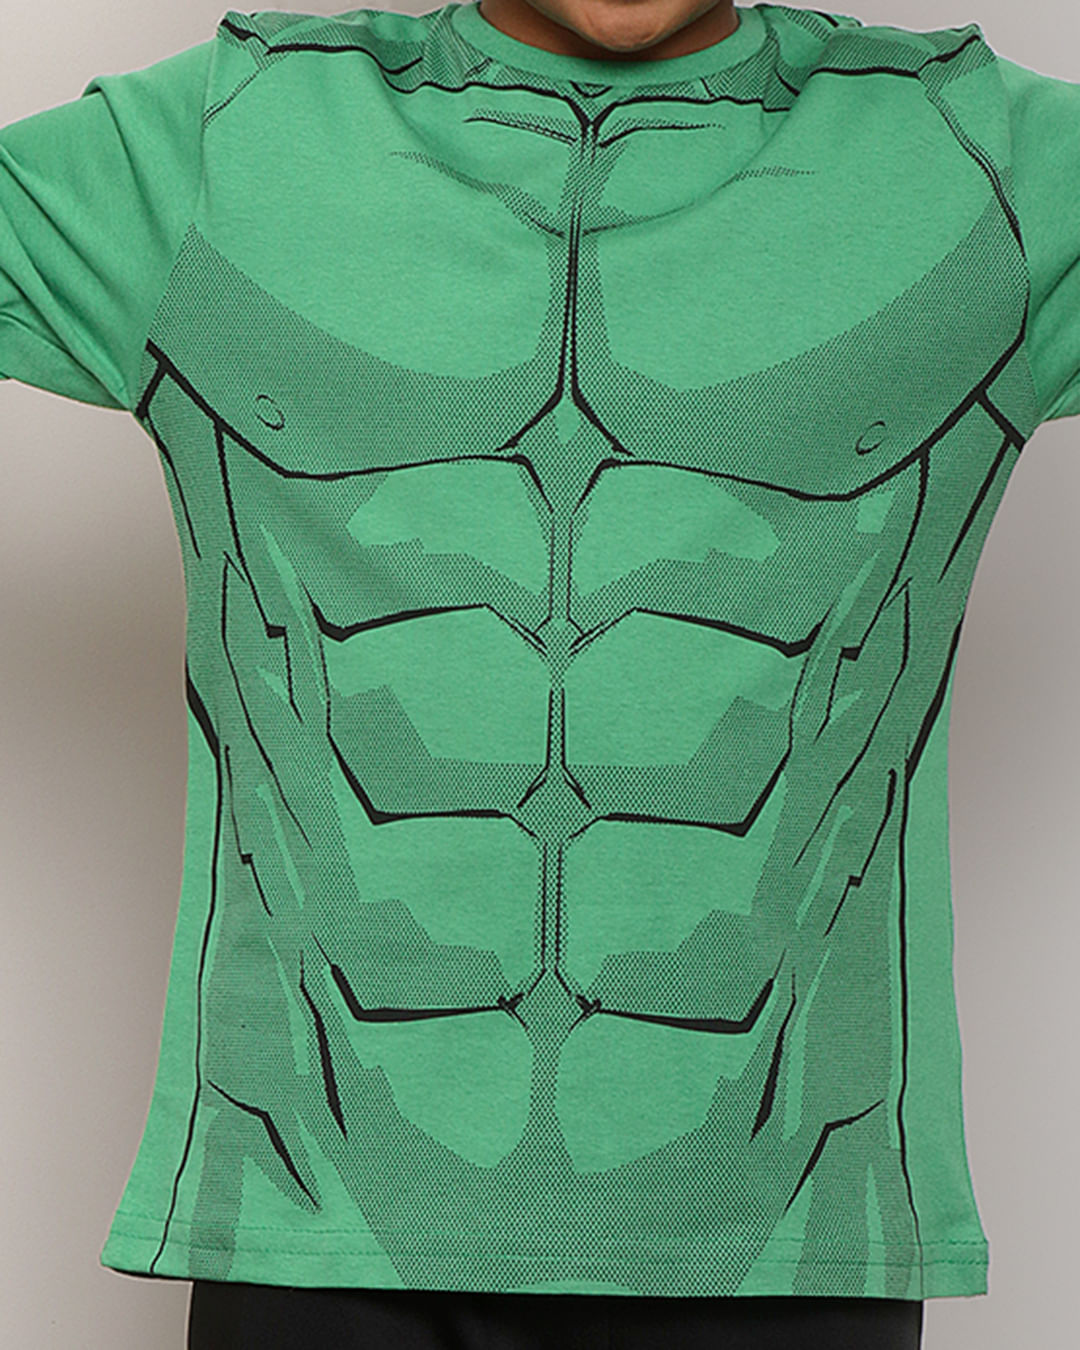 Camiseta-Ch33643-Ml-M410-Hulk---Verde-Medio